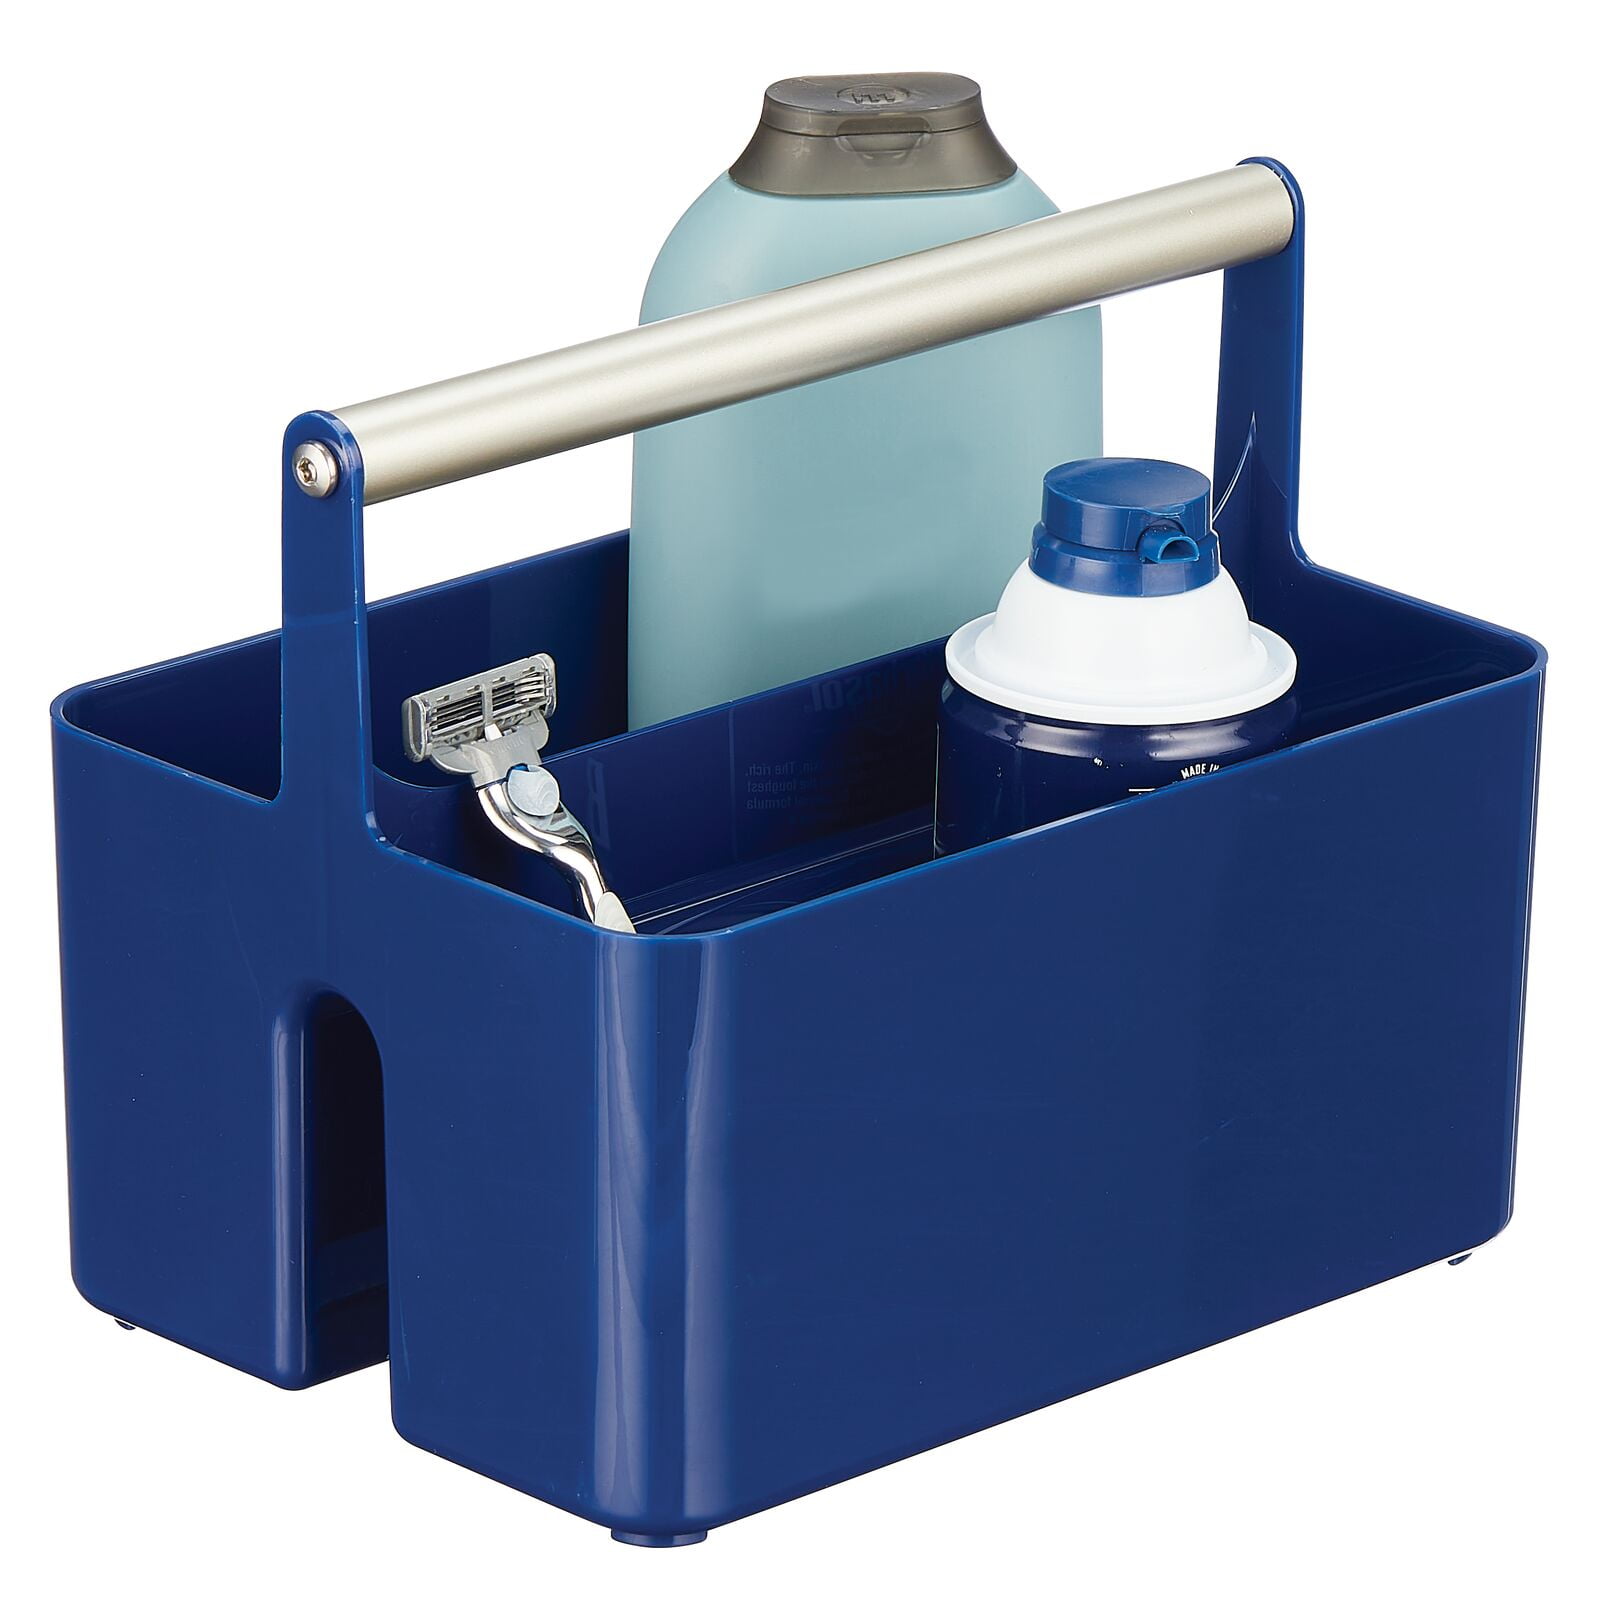 mDesign Plastic Shower Caddy Storage Organizer Utility Tote Navy Blue/Satin